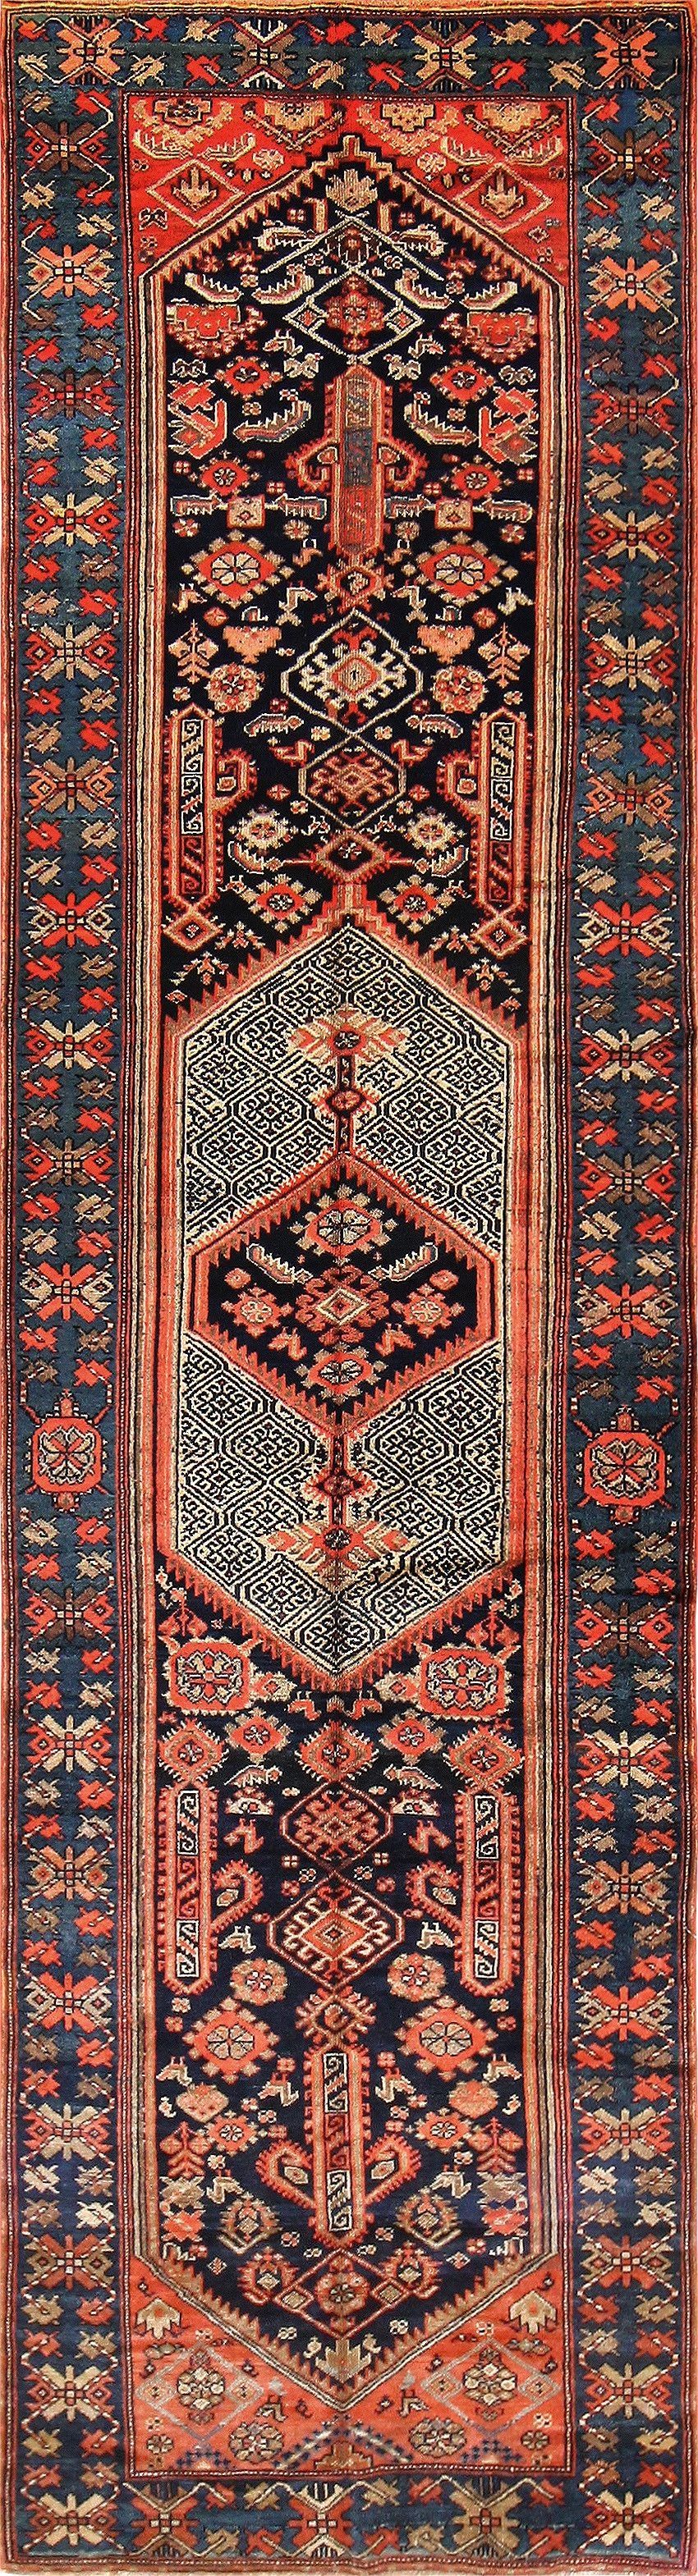 Runner Rugs Carpet Runners Antique Hall Runners Oriental Runner Intended For Persian Carpet Runners (View 2 of 15)